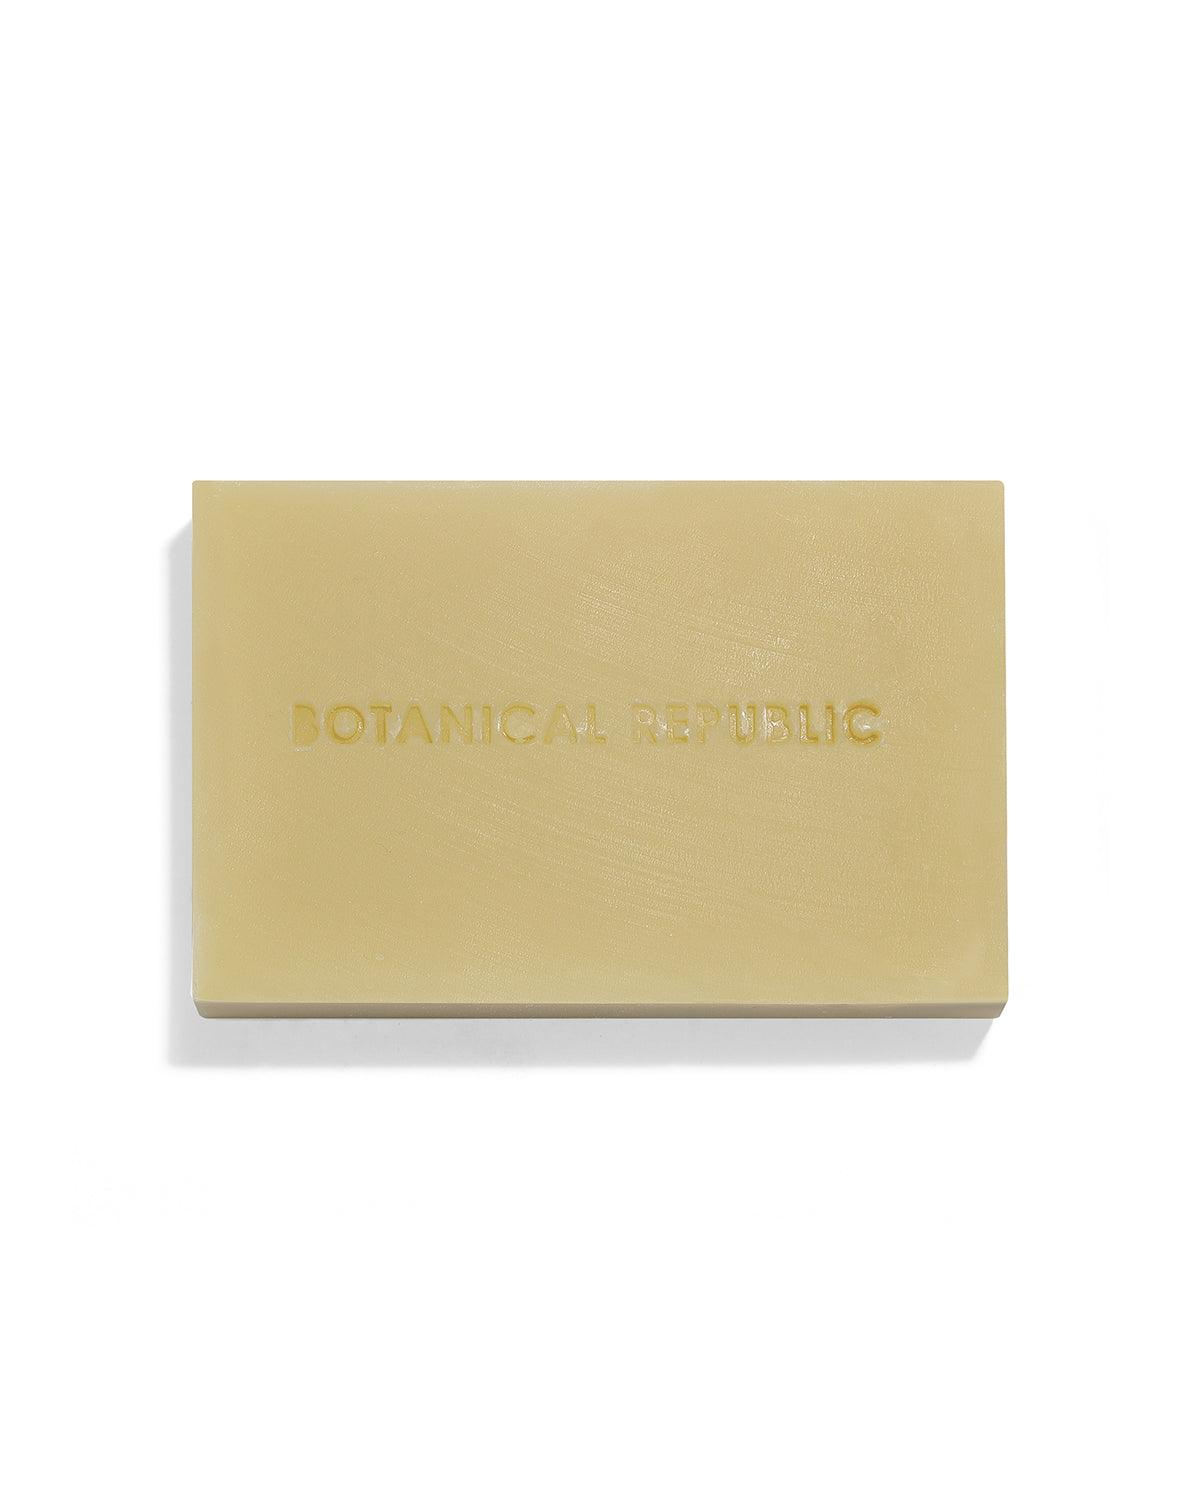 Gentle Bar Soap by Botanical Republic